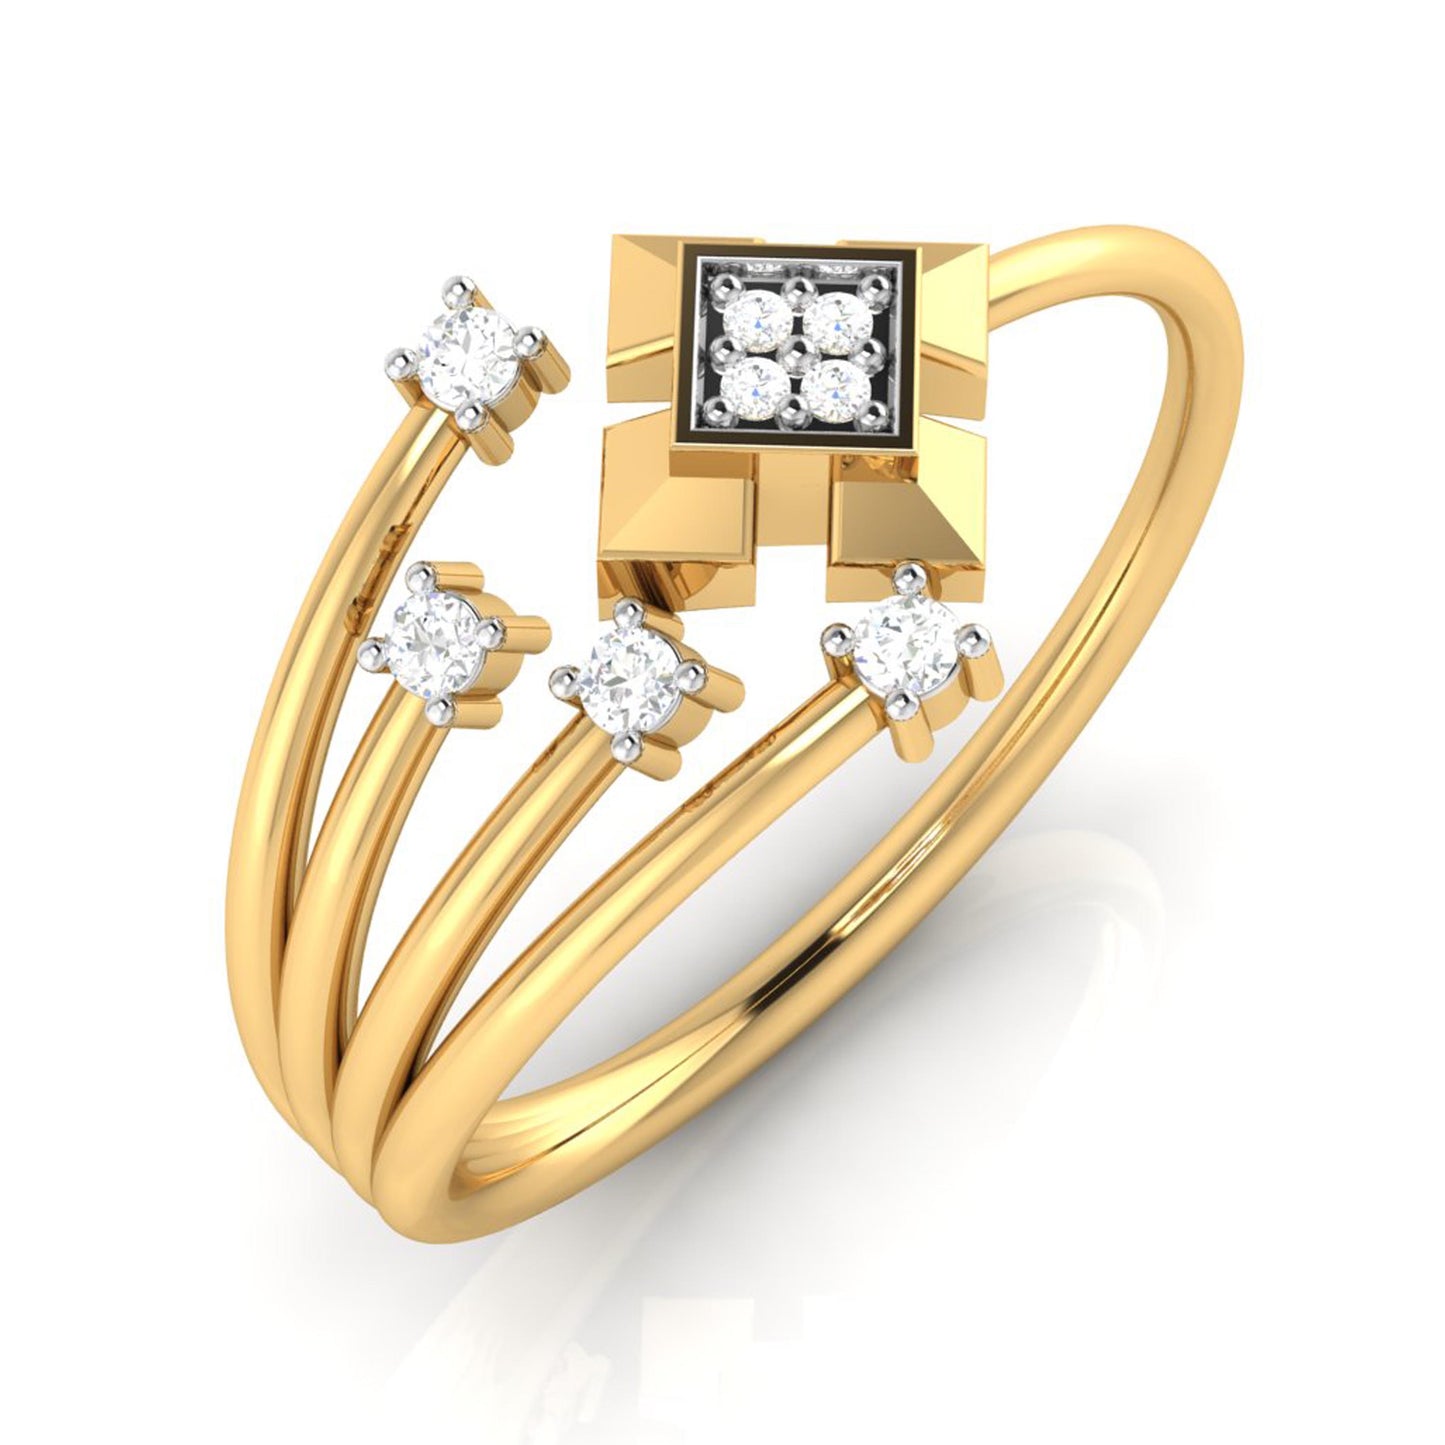 Wholesaler of Enchanting 14ct diamond ring design for women | Jewelxy -  228830